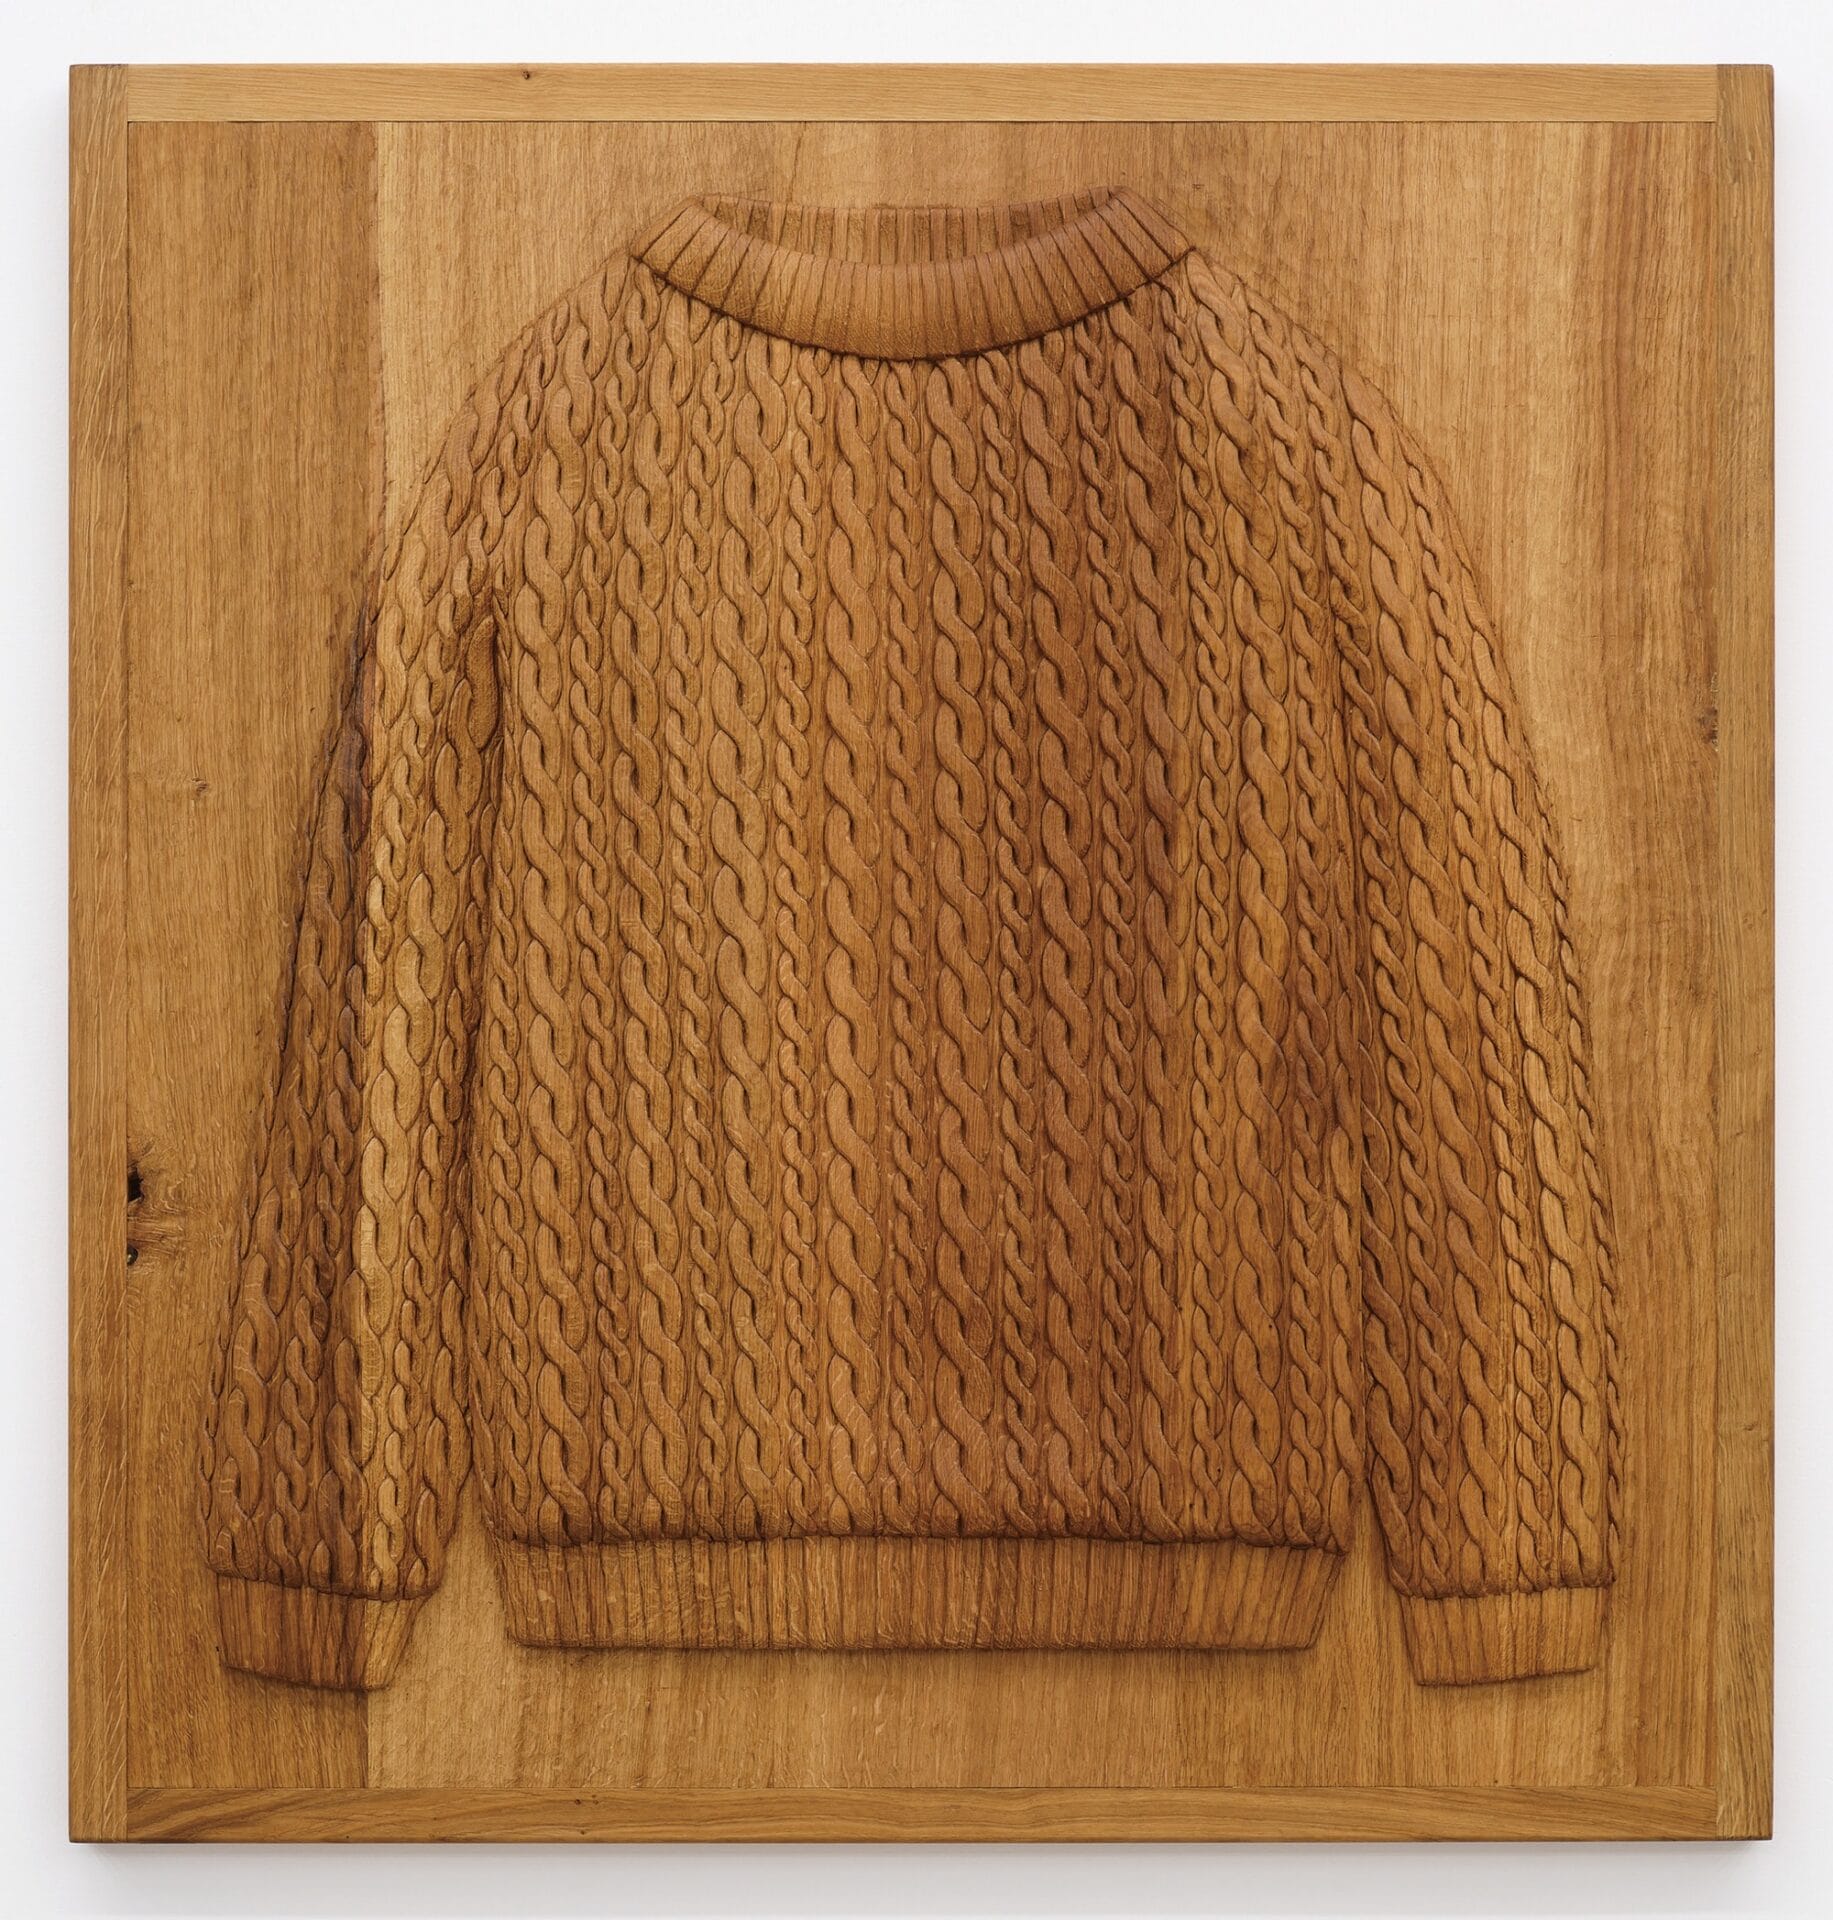 a wooden bas relief in oak of a knit sweater